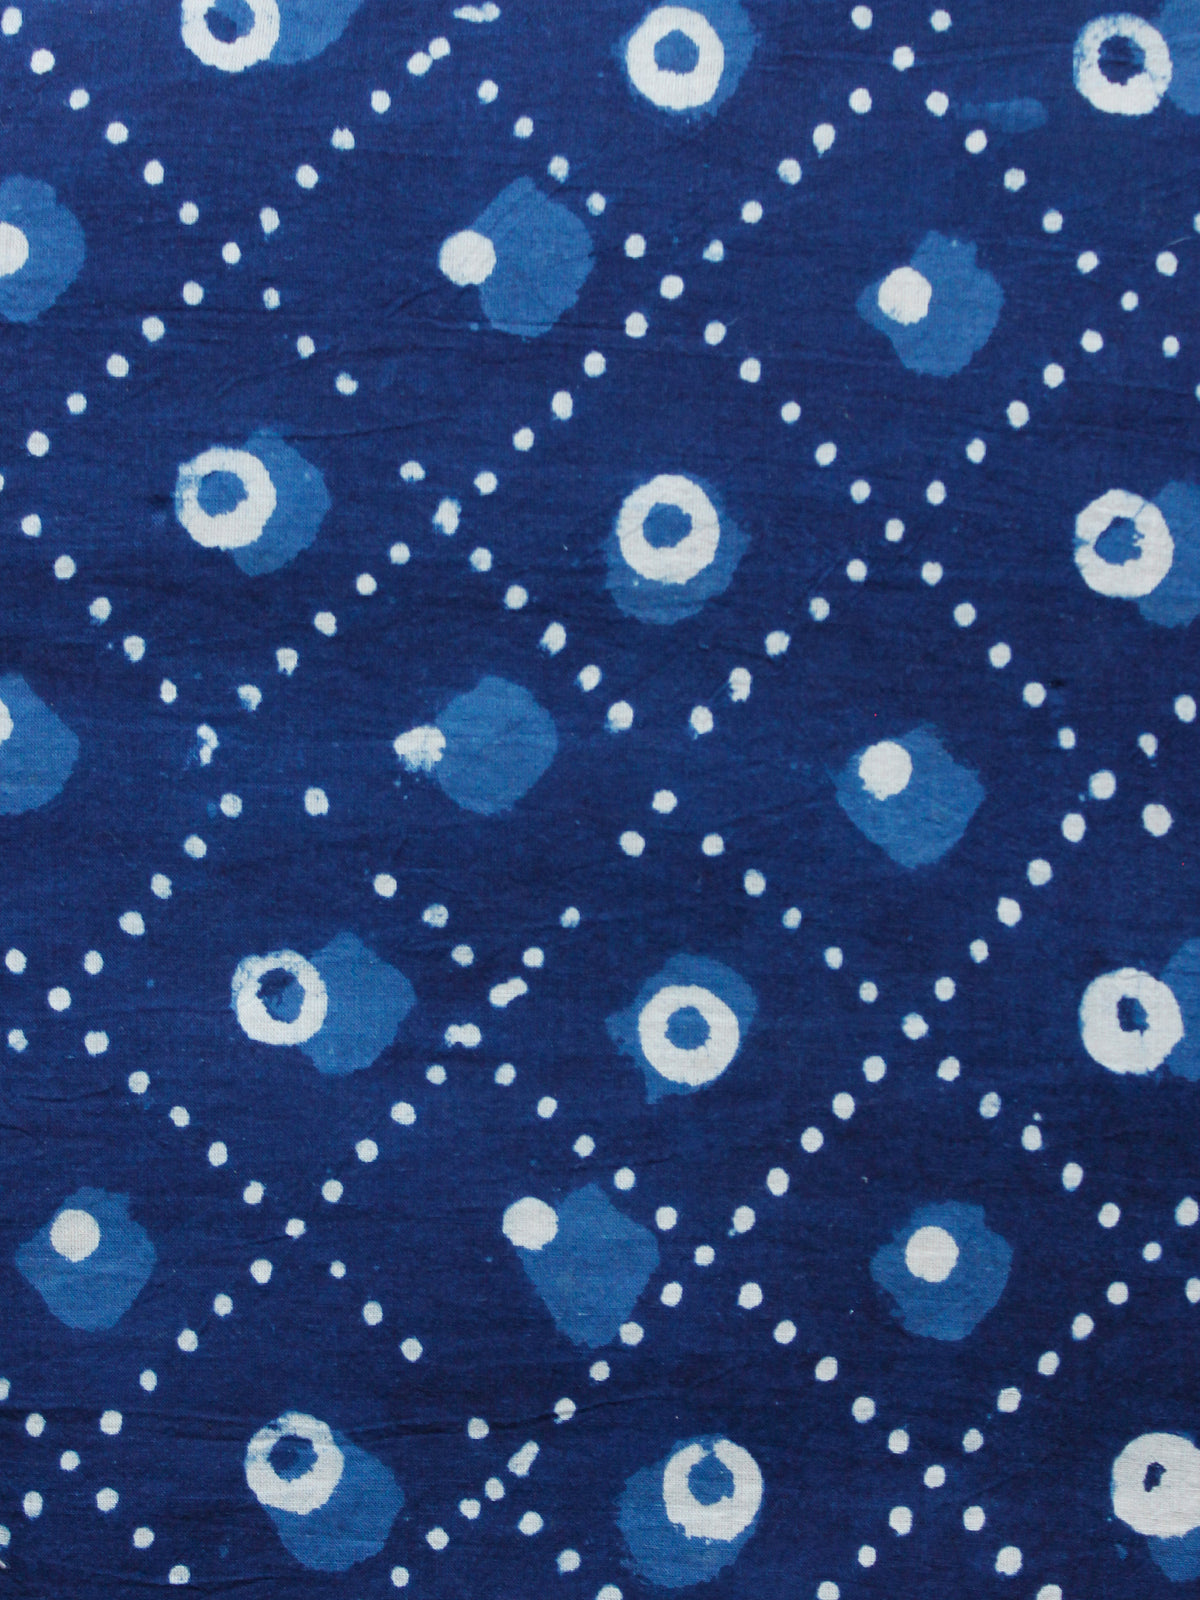 Indigo Blue White Maroon Hand Block Printed Cotton Fabric Per Meter - F001F1560